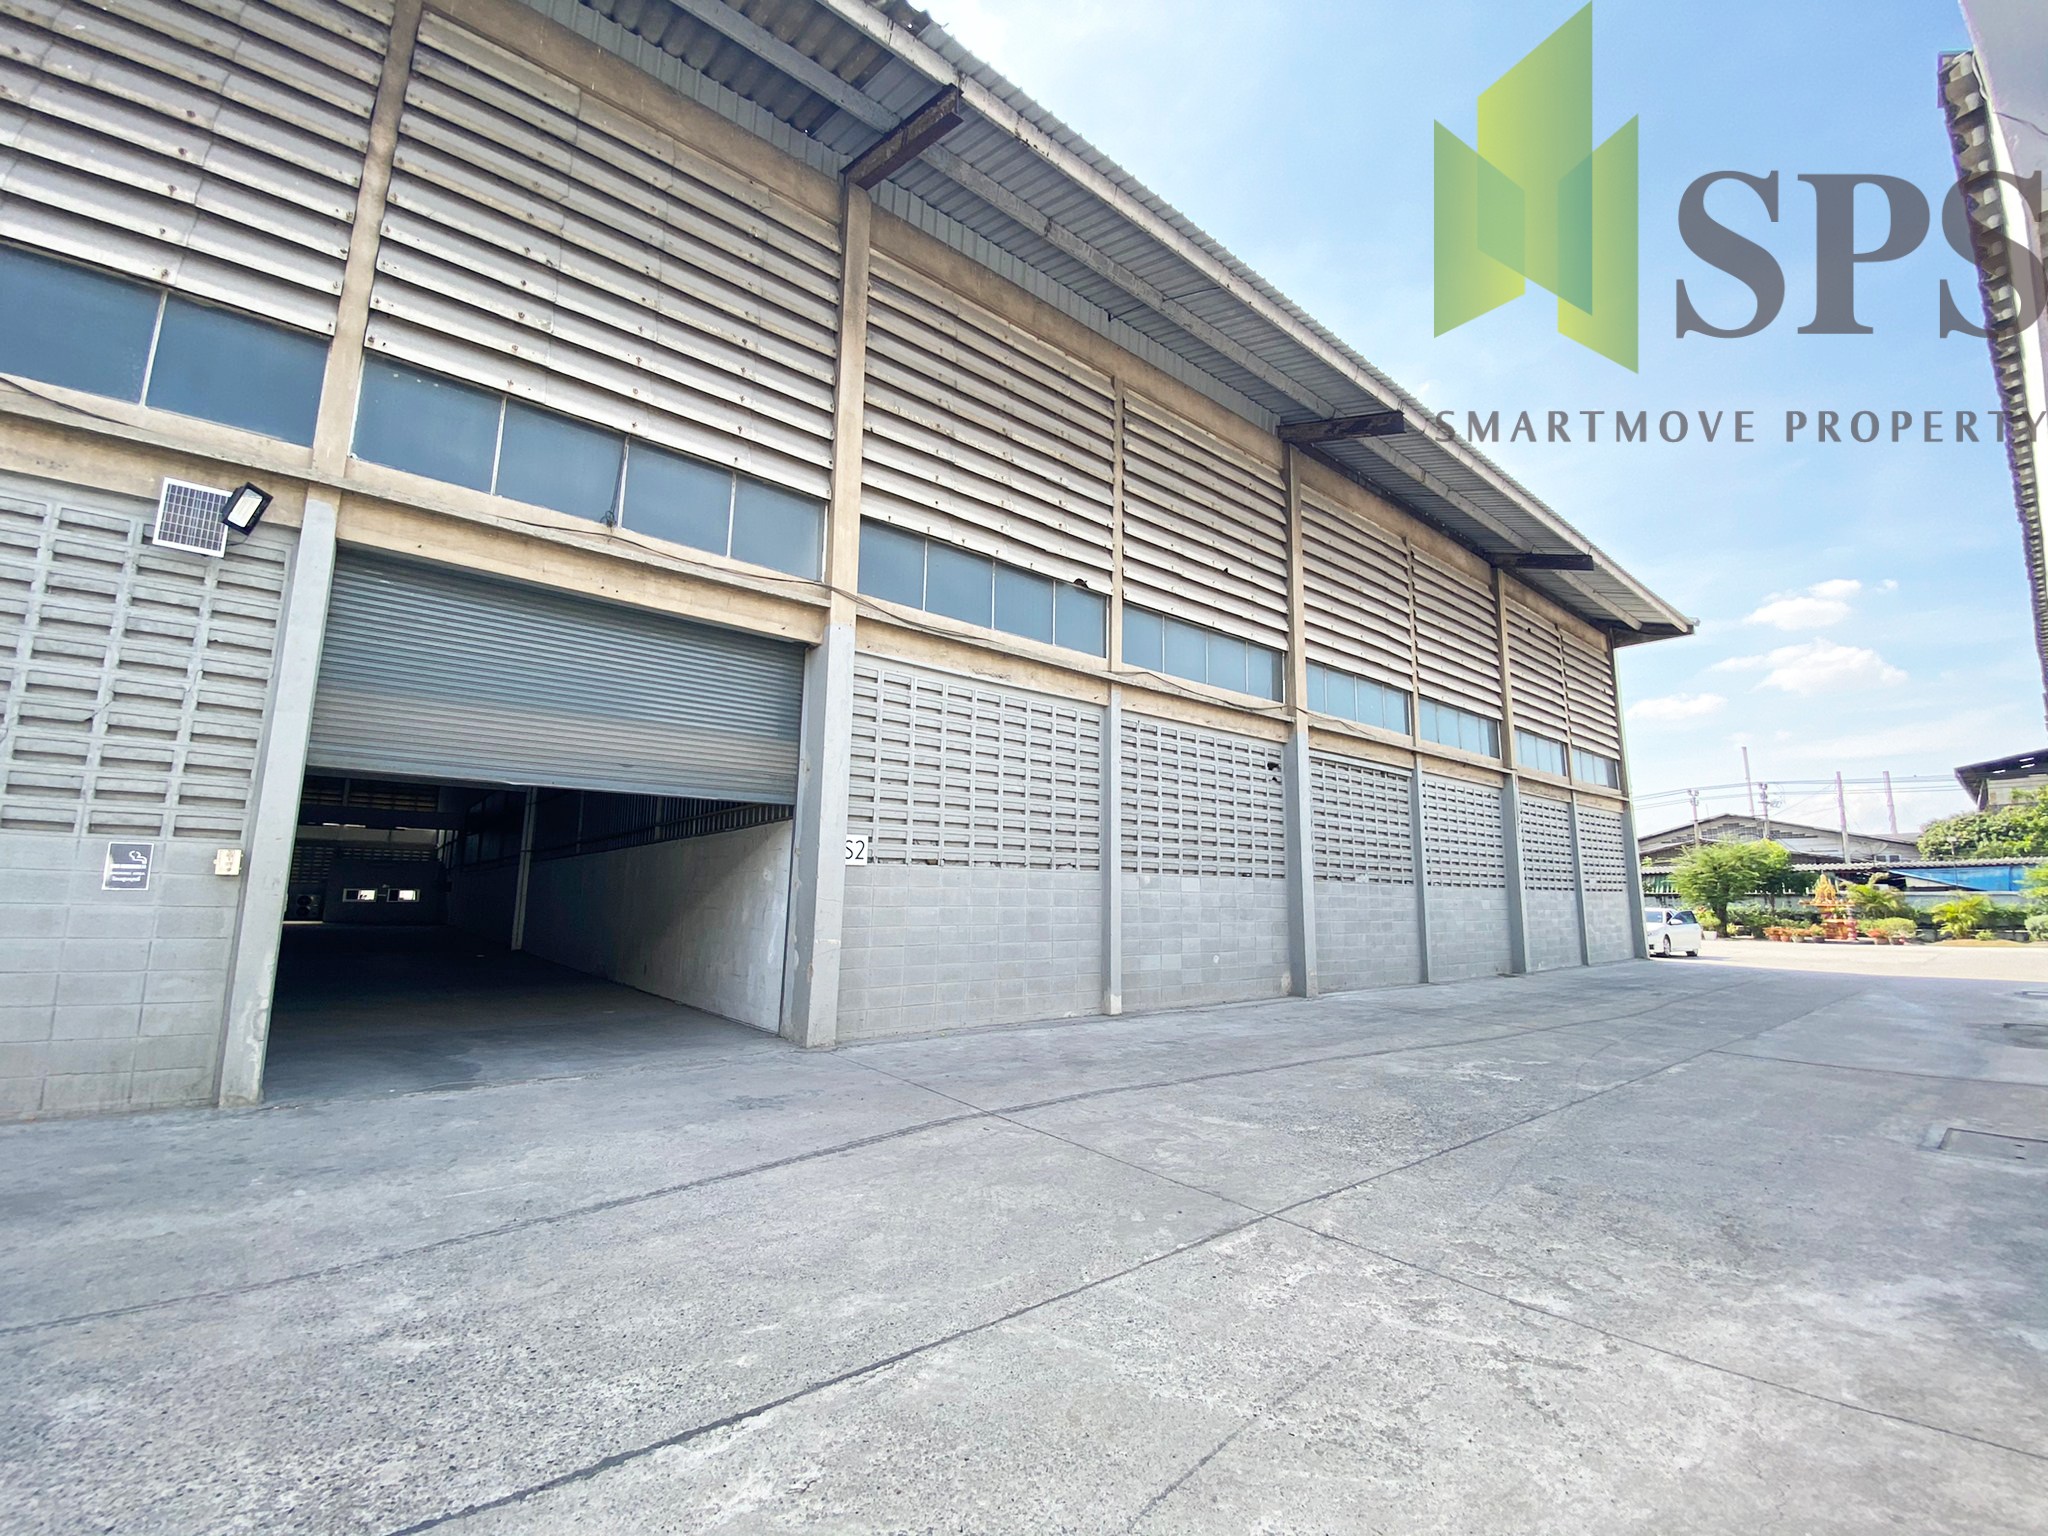 Factory, Warehouse for RENT at Bangpoo Sukhumvit road, Samutprakan / โกดัง, โรงงานสำหรับเช่า ติดสถานีไฟฟ้า BTS สายสีเขียว ถนนสุขุมวิท(Property ID: SPS-PPW139)